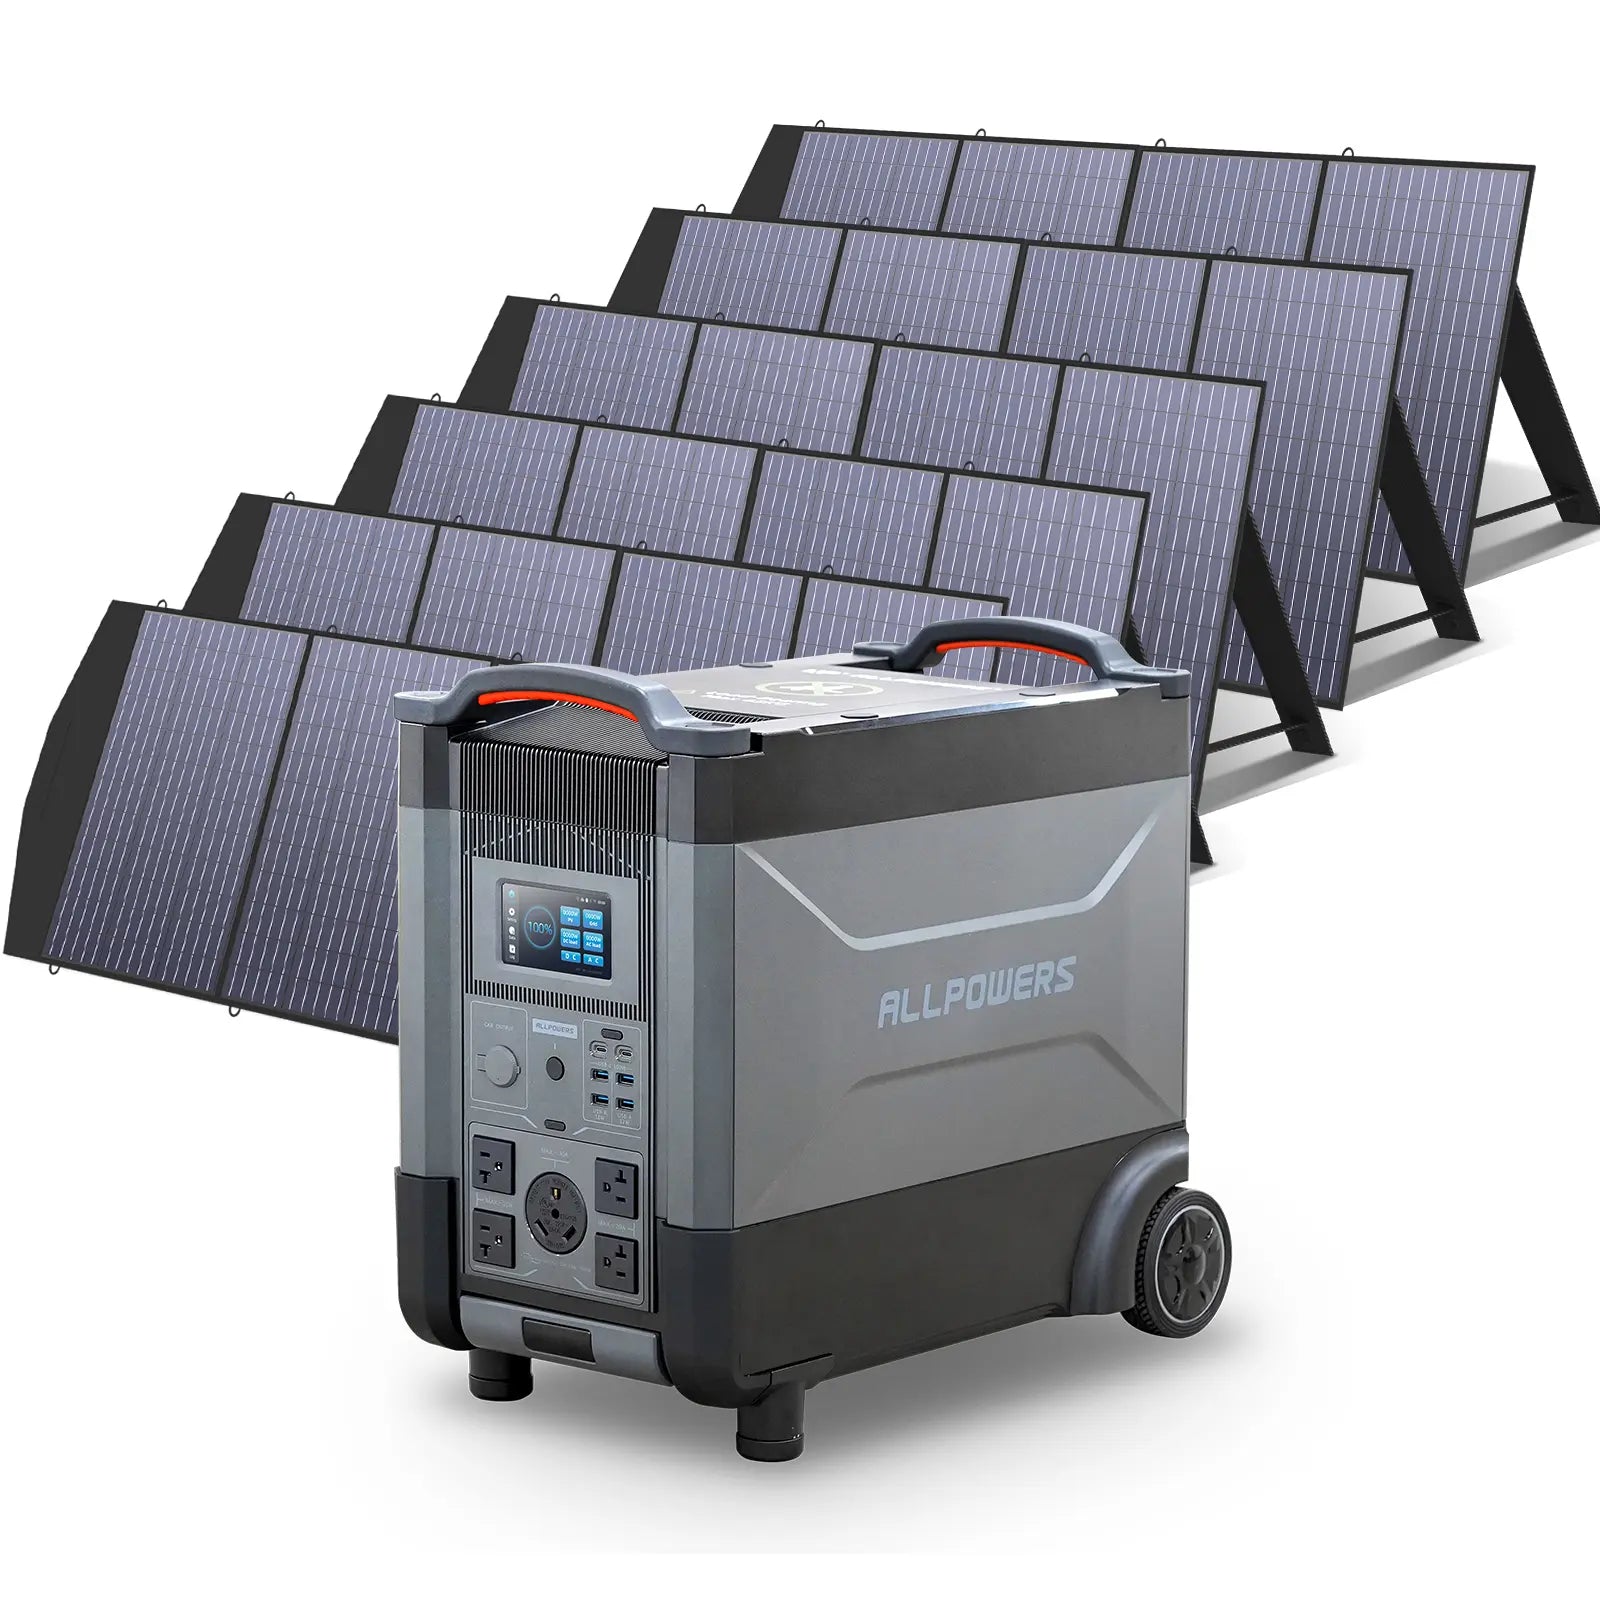 ALLPOWERS Solar Generator Kit 4000W (R4000 + 6 x SP033 200W Solar Panel)